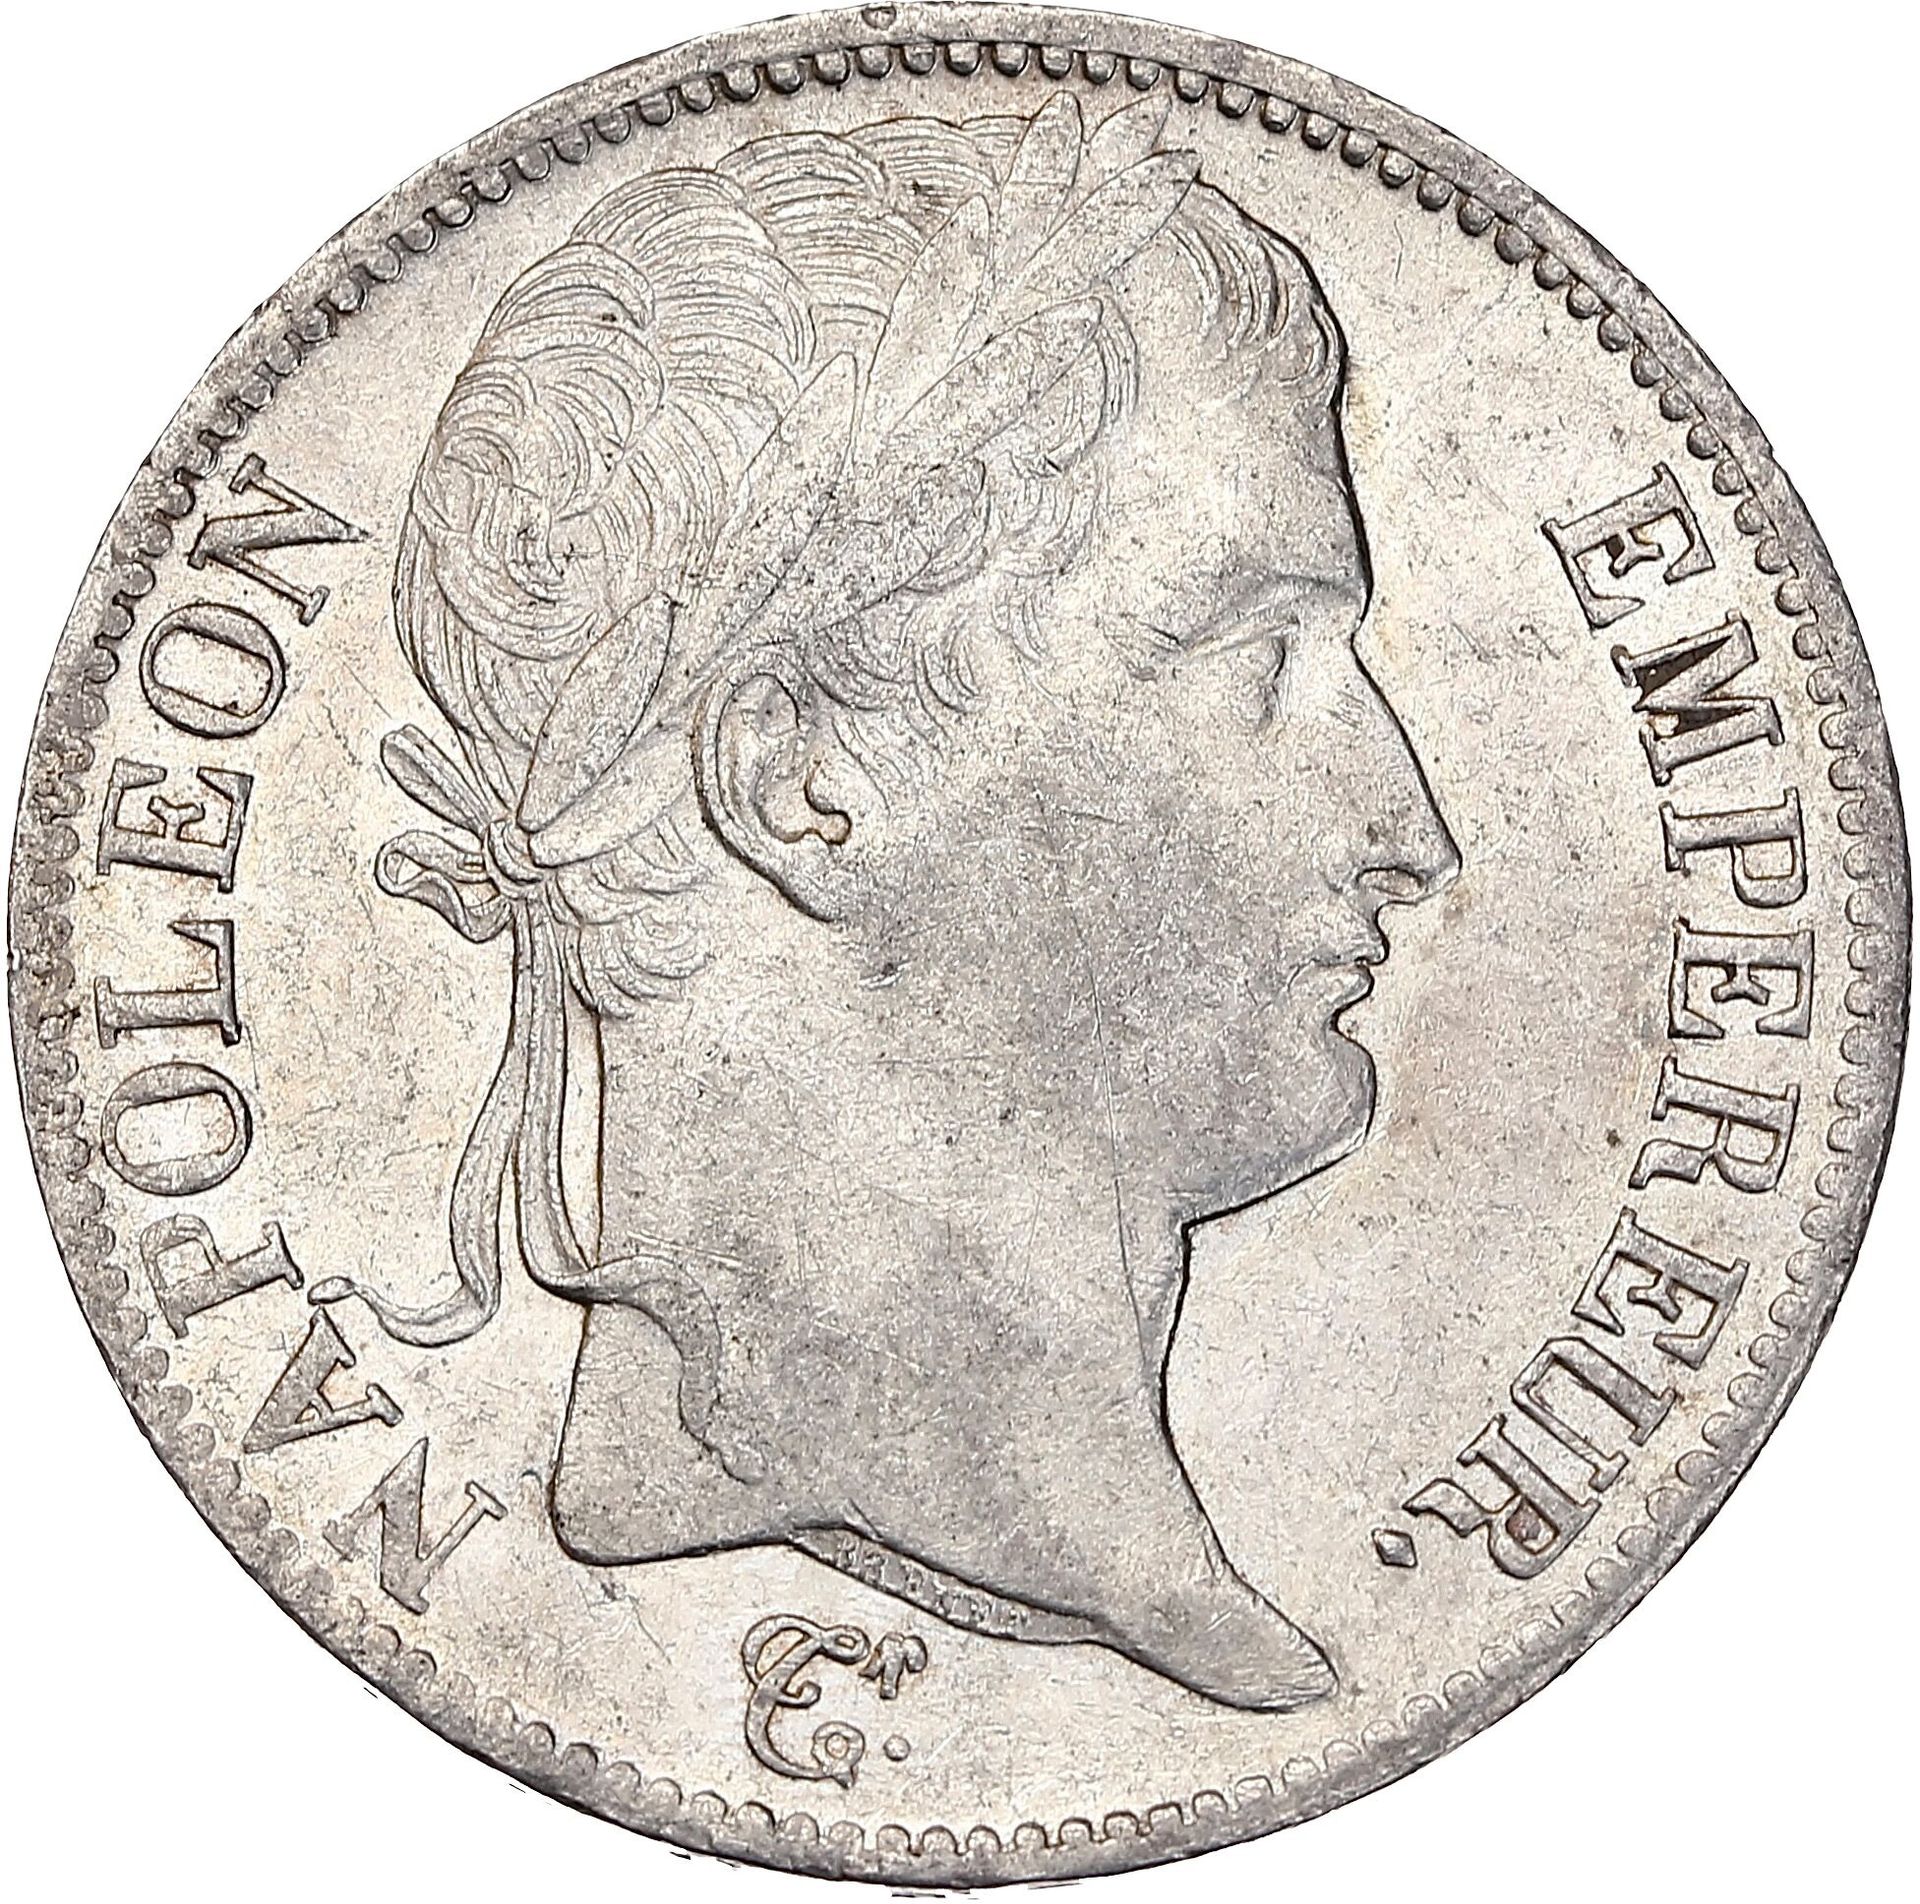 Null 第一帝国
5法郎 拿破仑，头戴桂冠。帝国。1812.巴黎。
他的桂冠头向右。
R/价值在月桂花环中。
G. 584.
铸造精良。极好的。